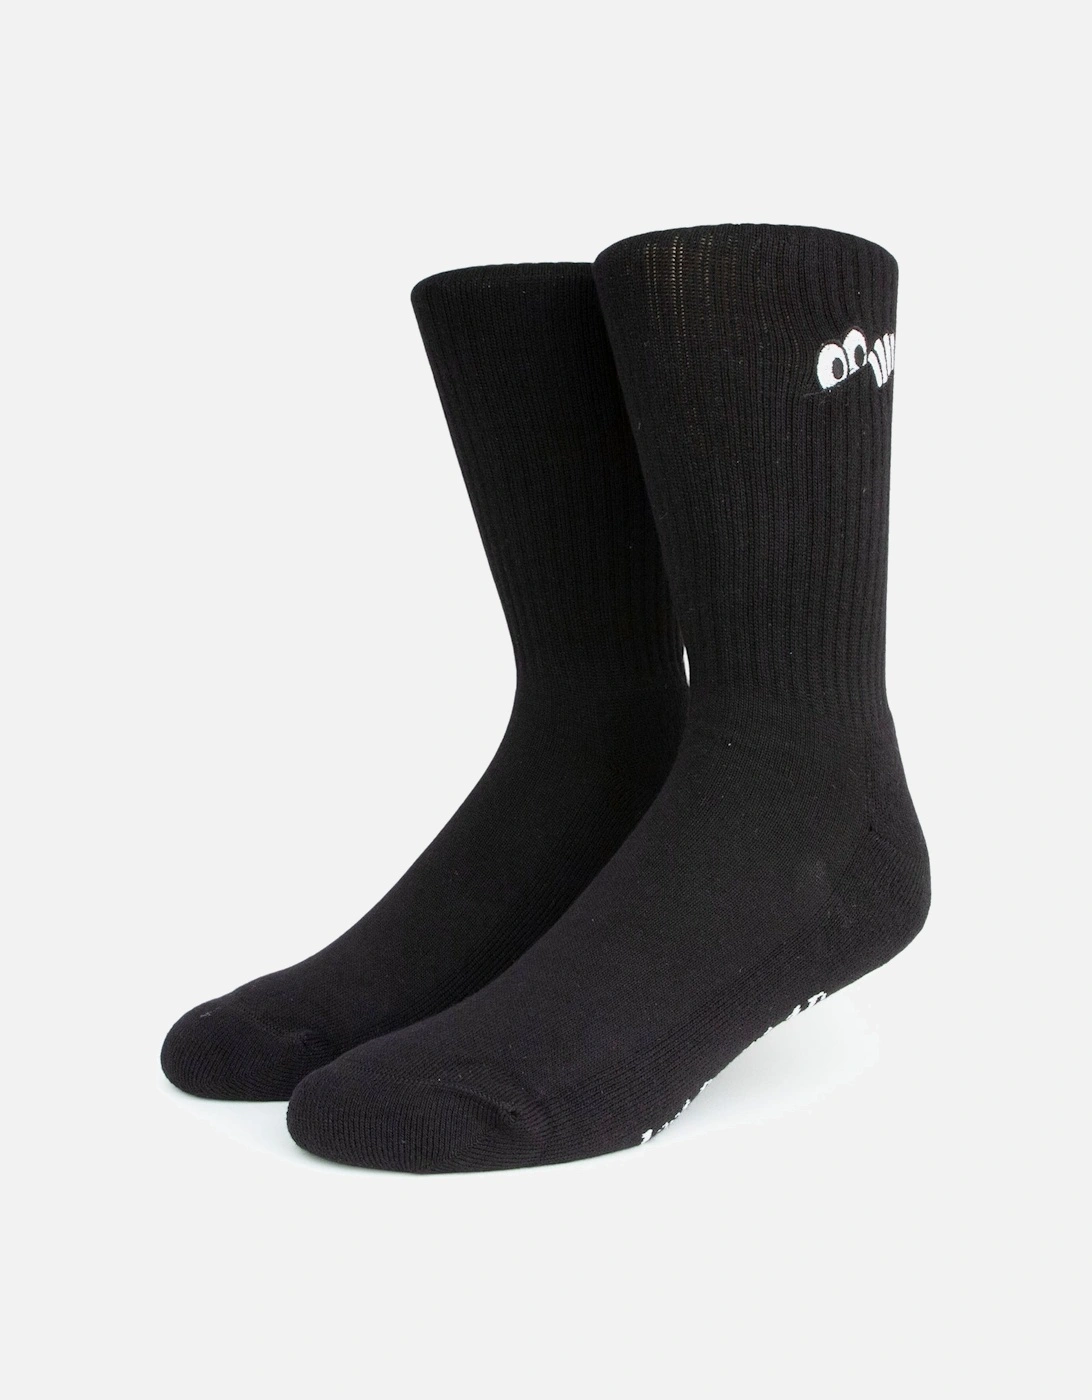 Eye Socks - Black, 2 of 1